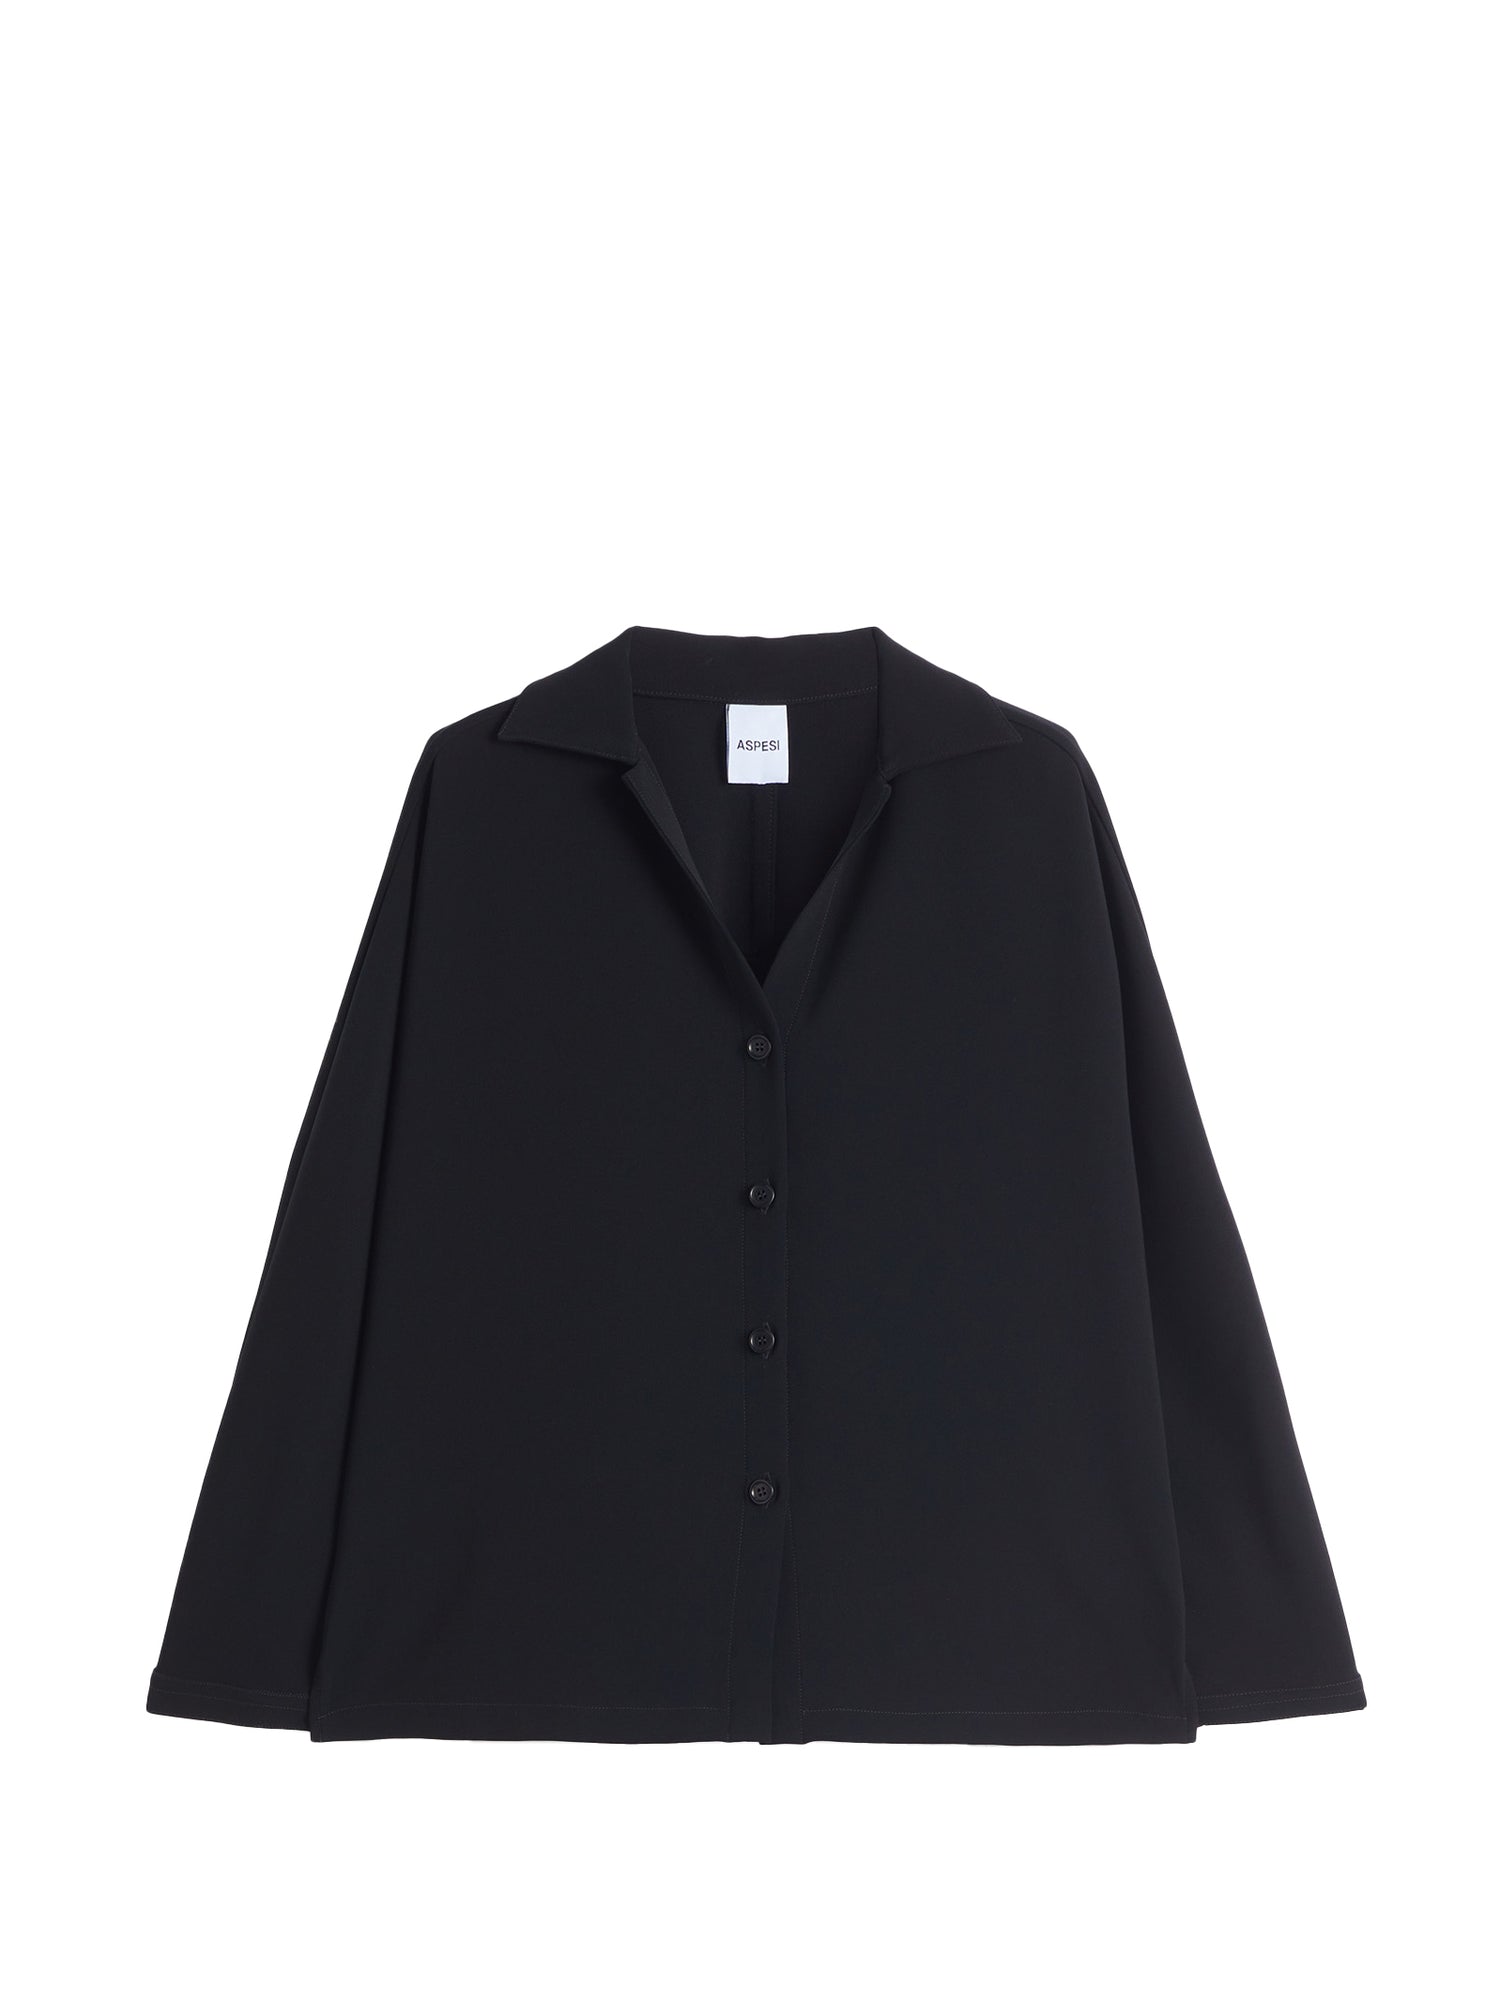 Buttoned shirt jacket, black